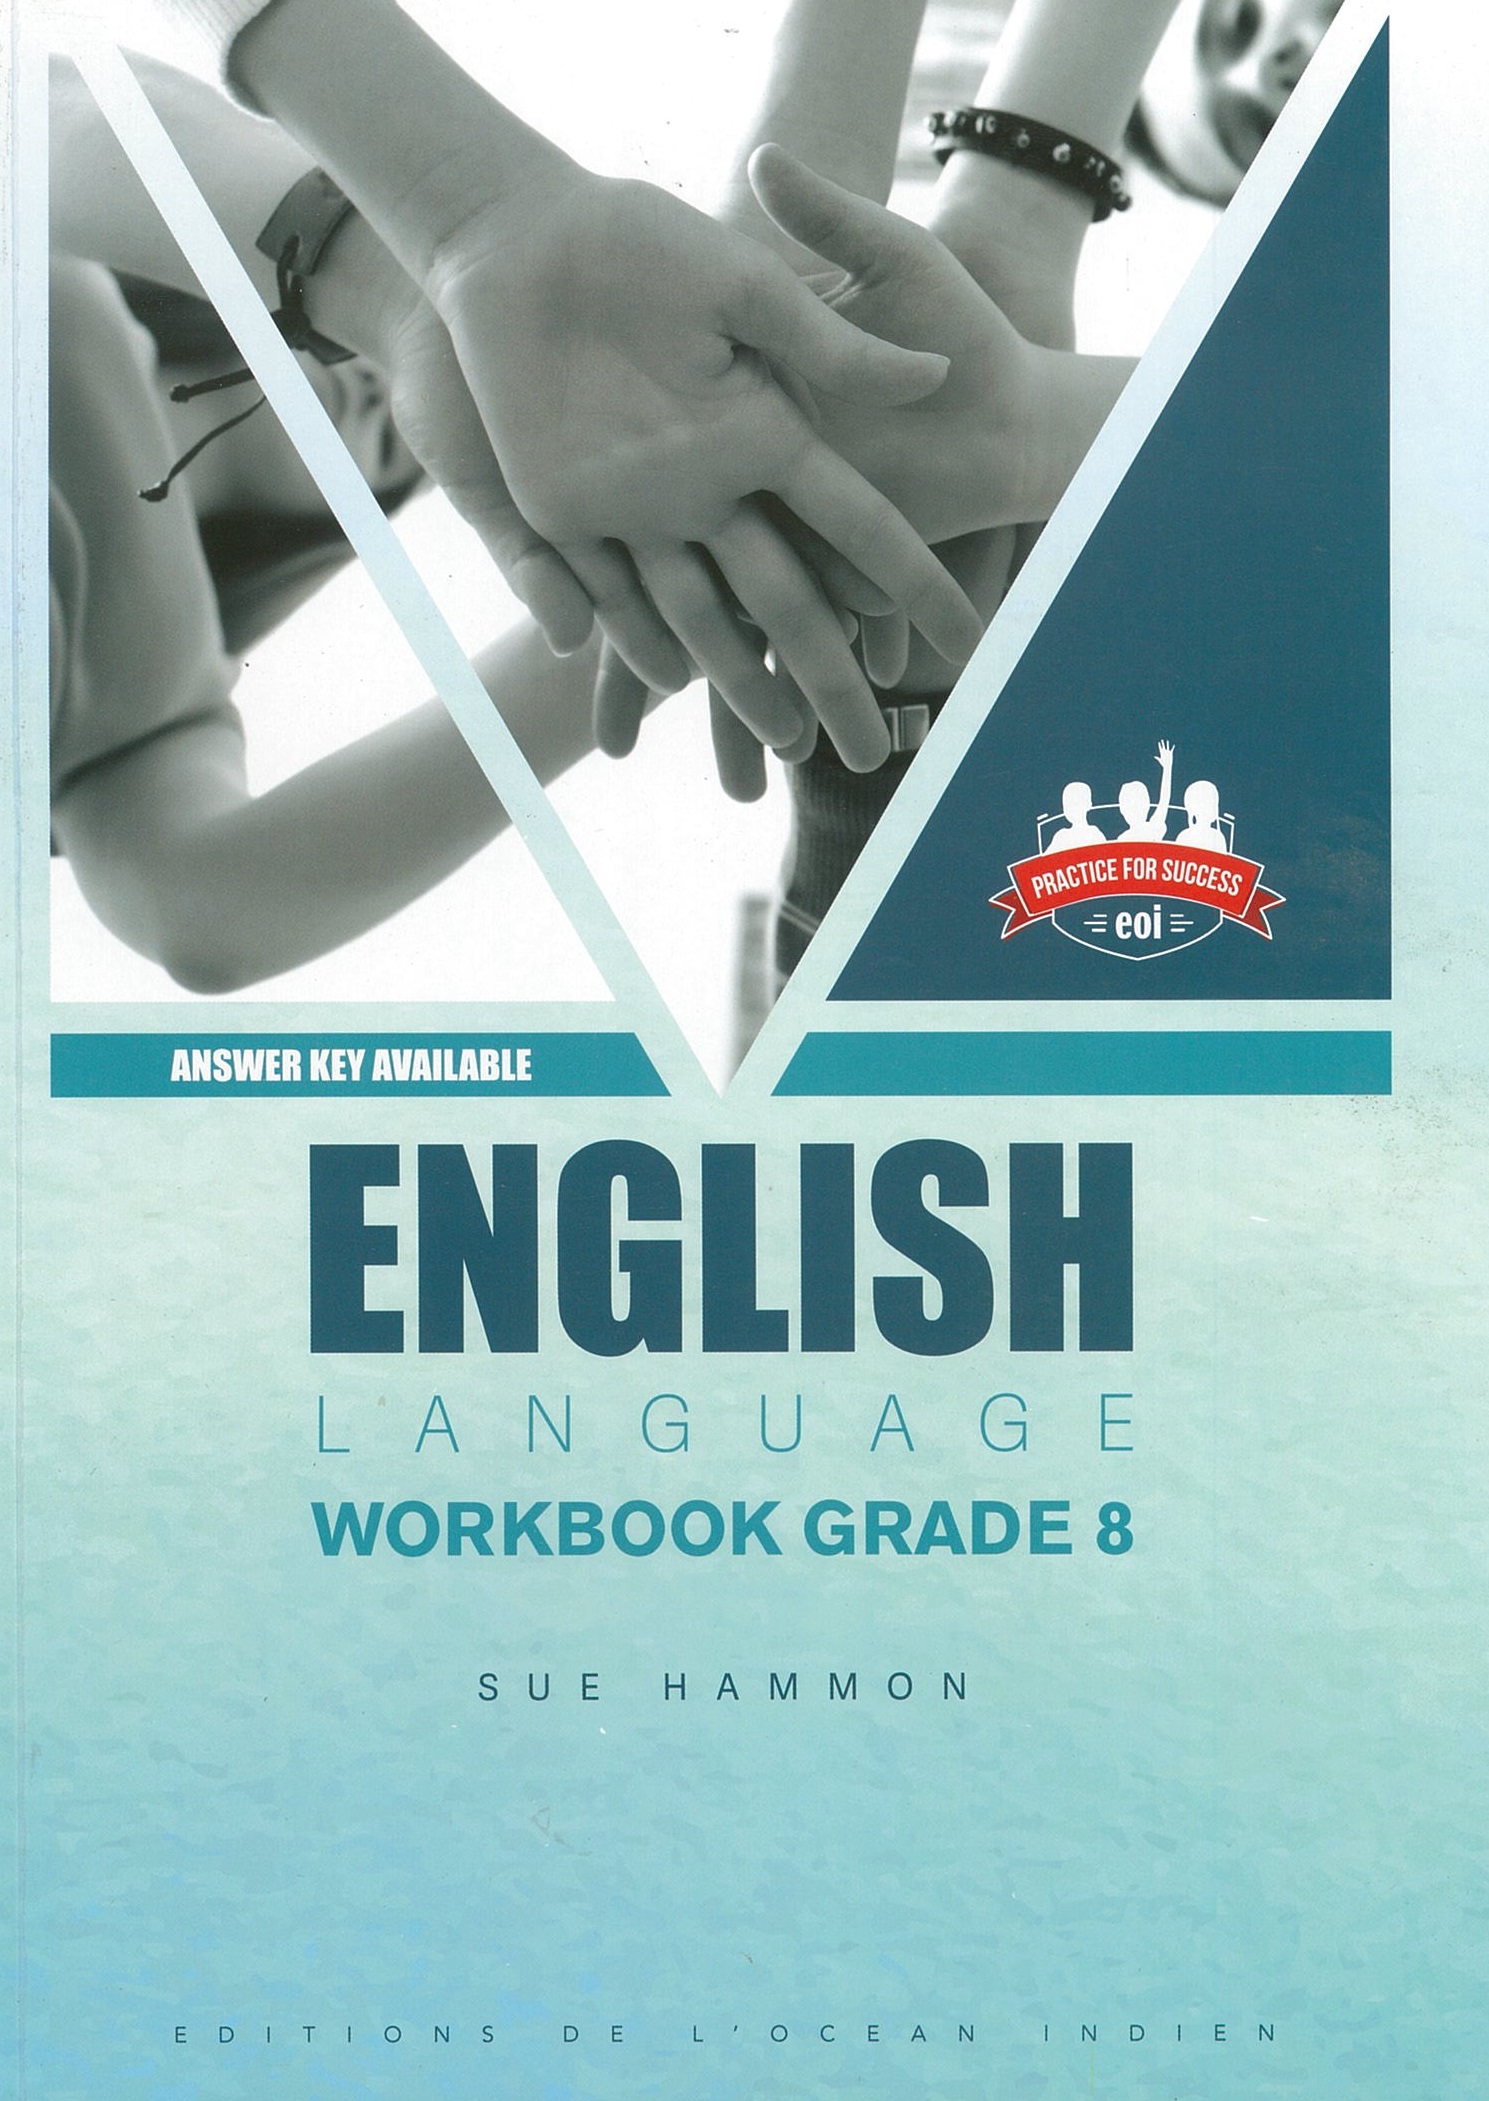 ENGLISH WORKBOOK GRADE 8 - SUE HAMMON